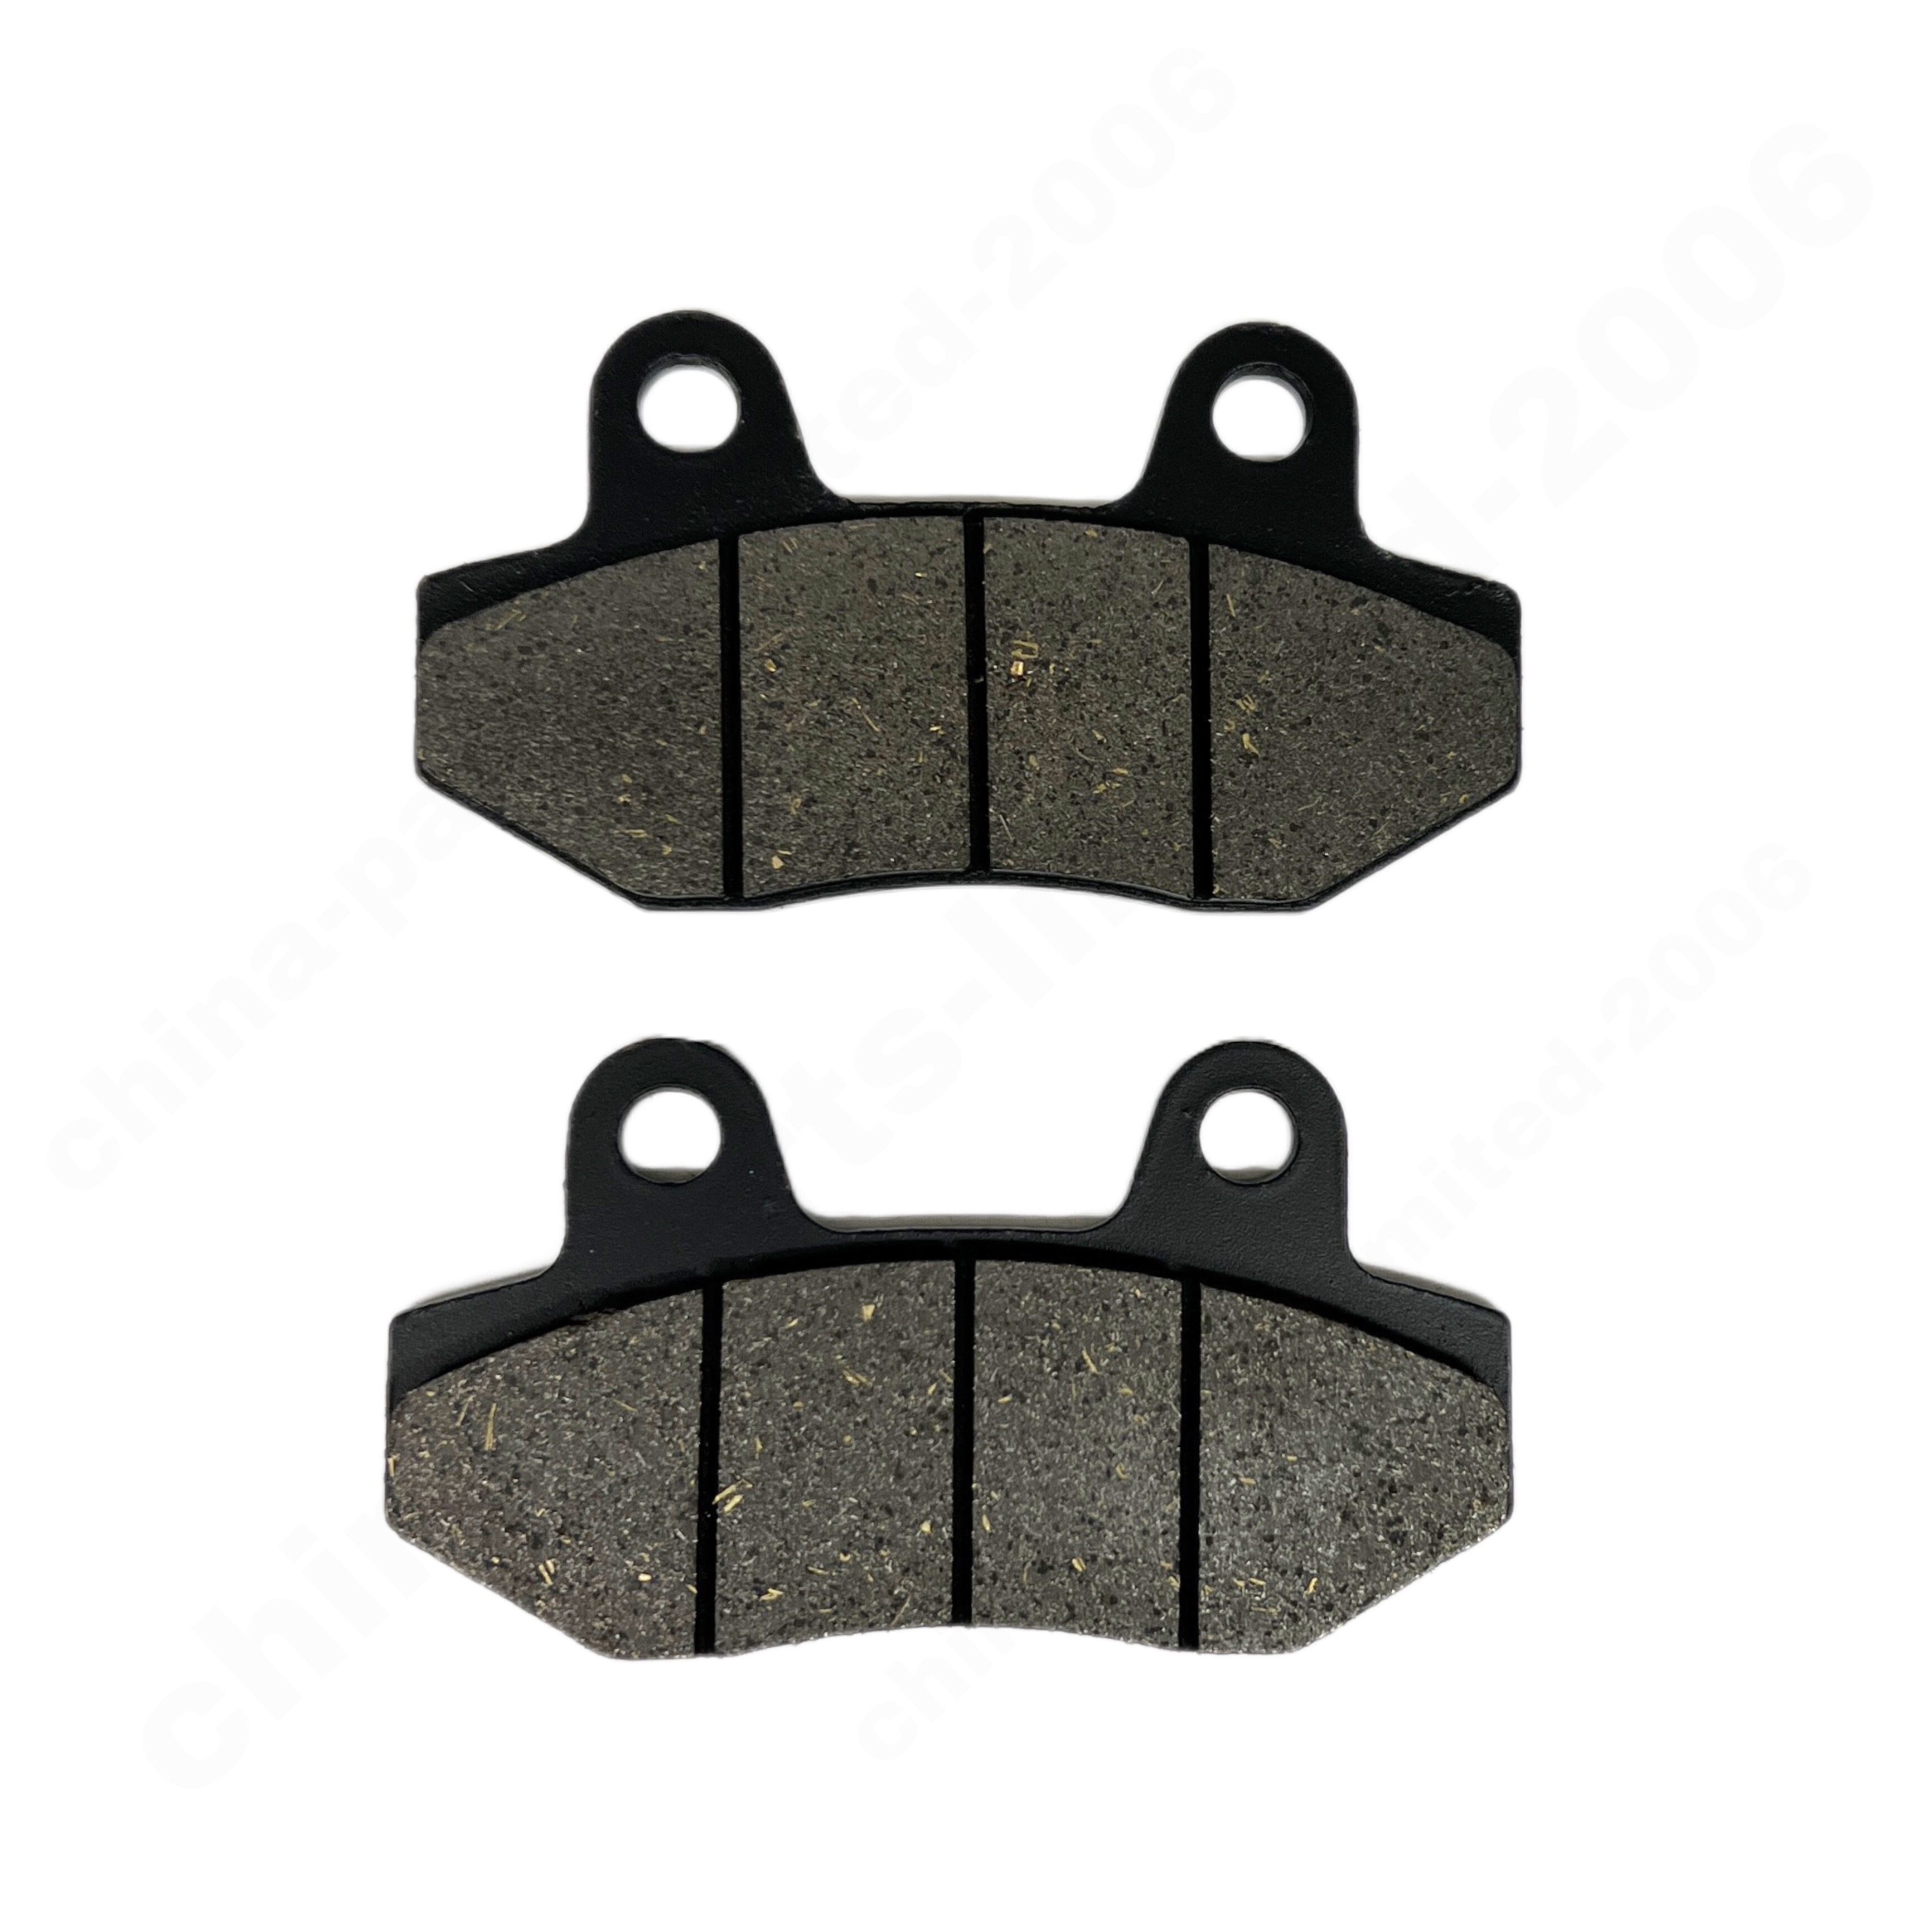 Brake Pads - GY 125 / 200 series